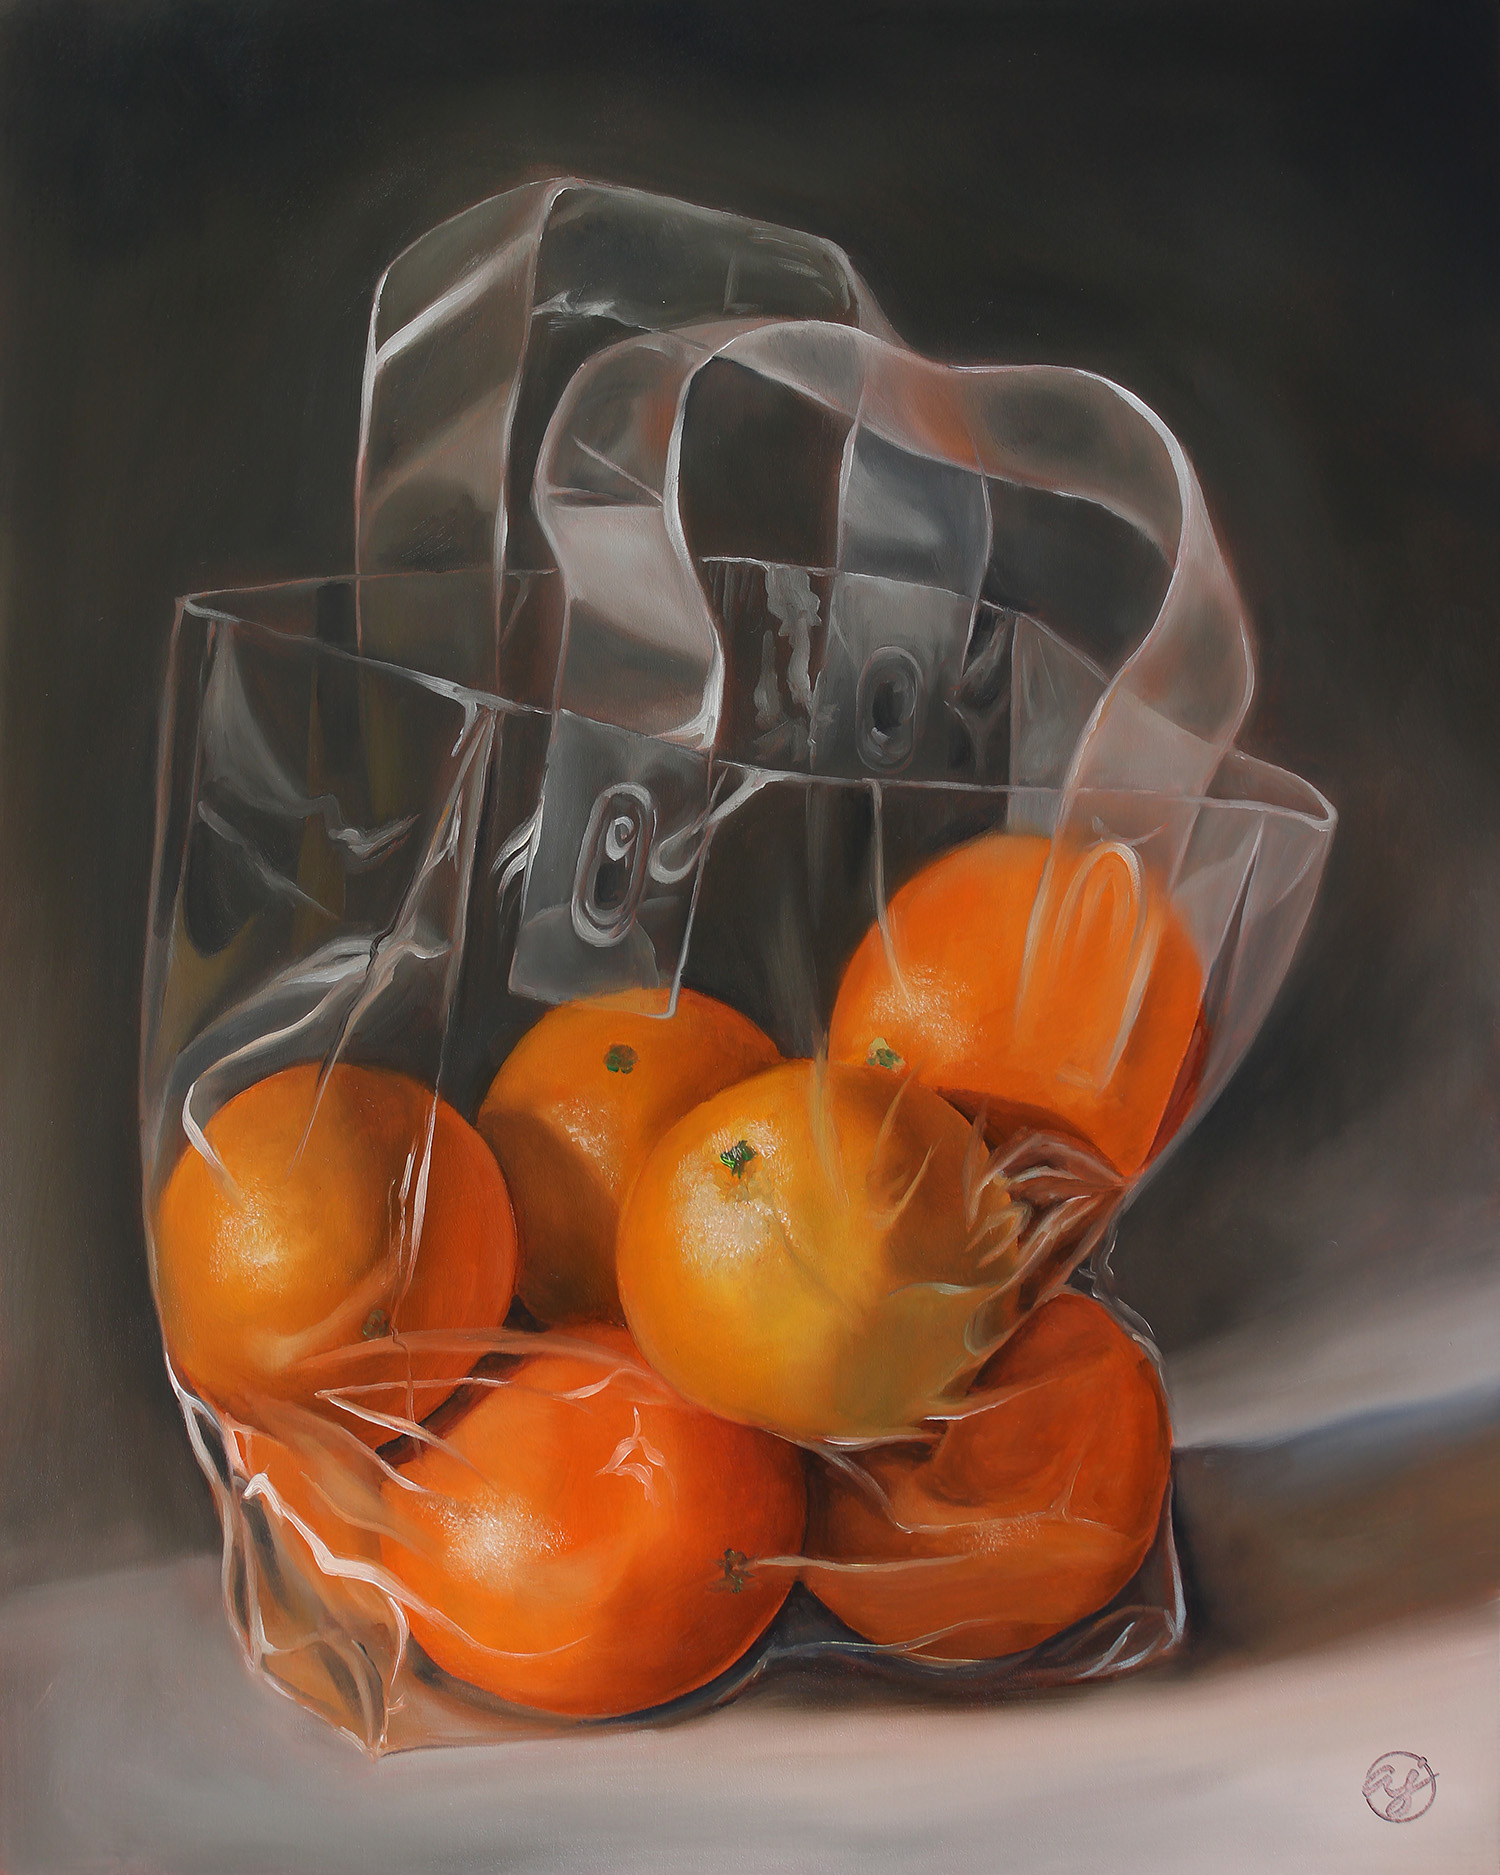 "Bag of Oranges" 16x20 Original Oil Painting by Abra Johnson